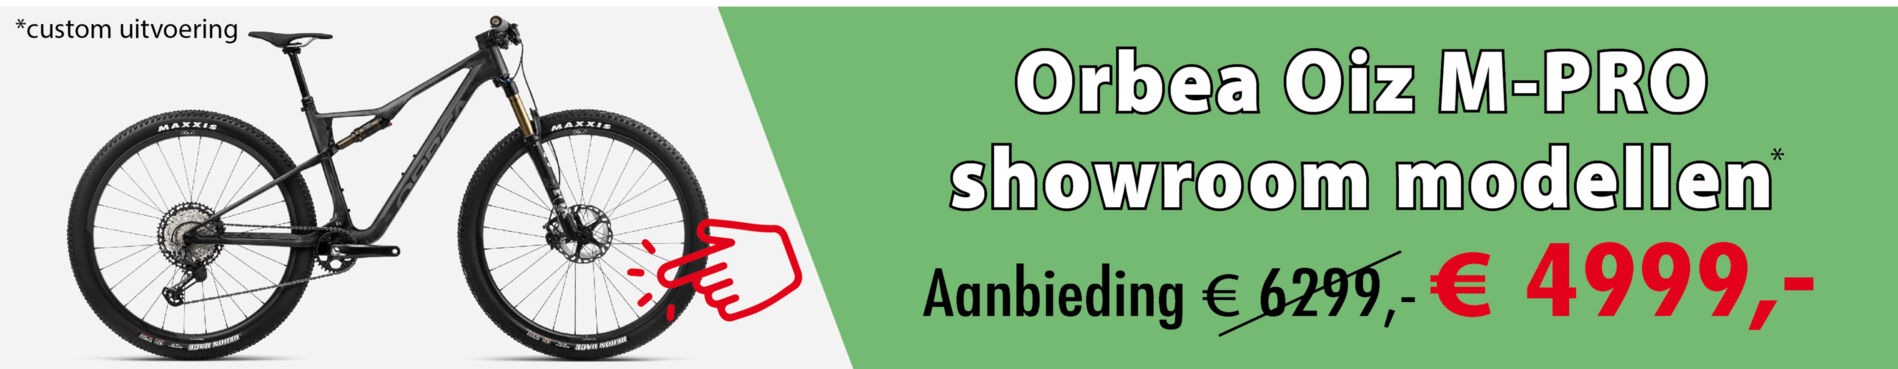 banner orbea oiz m-pro aanbieding_korting_maxibikes.jpg